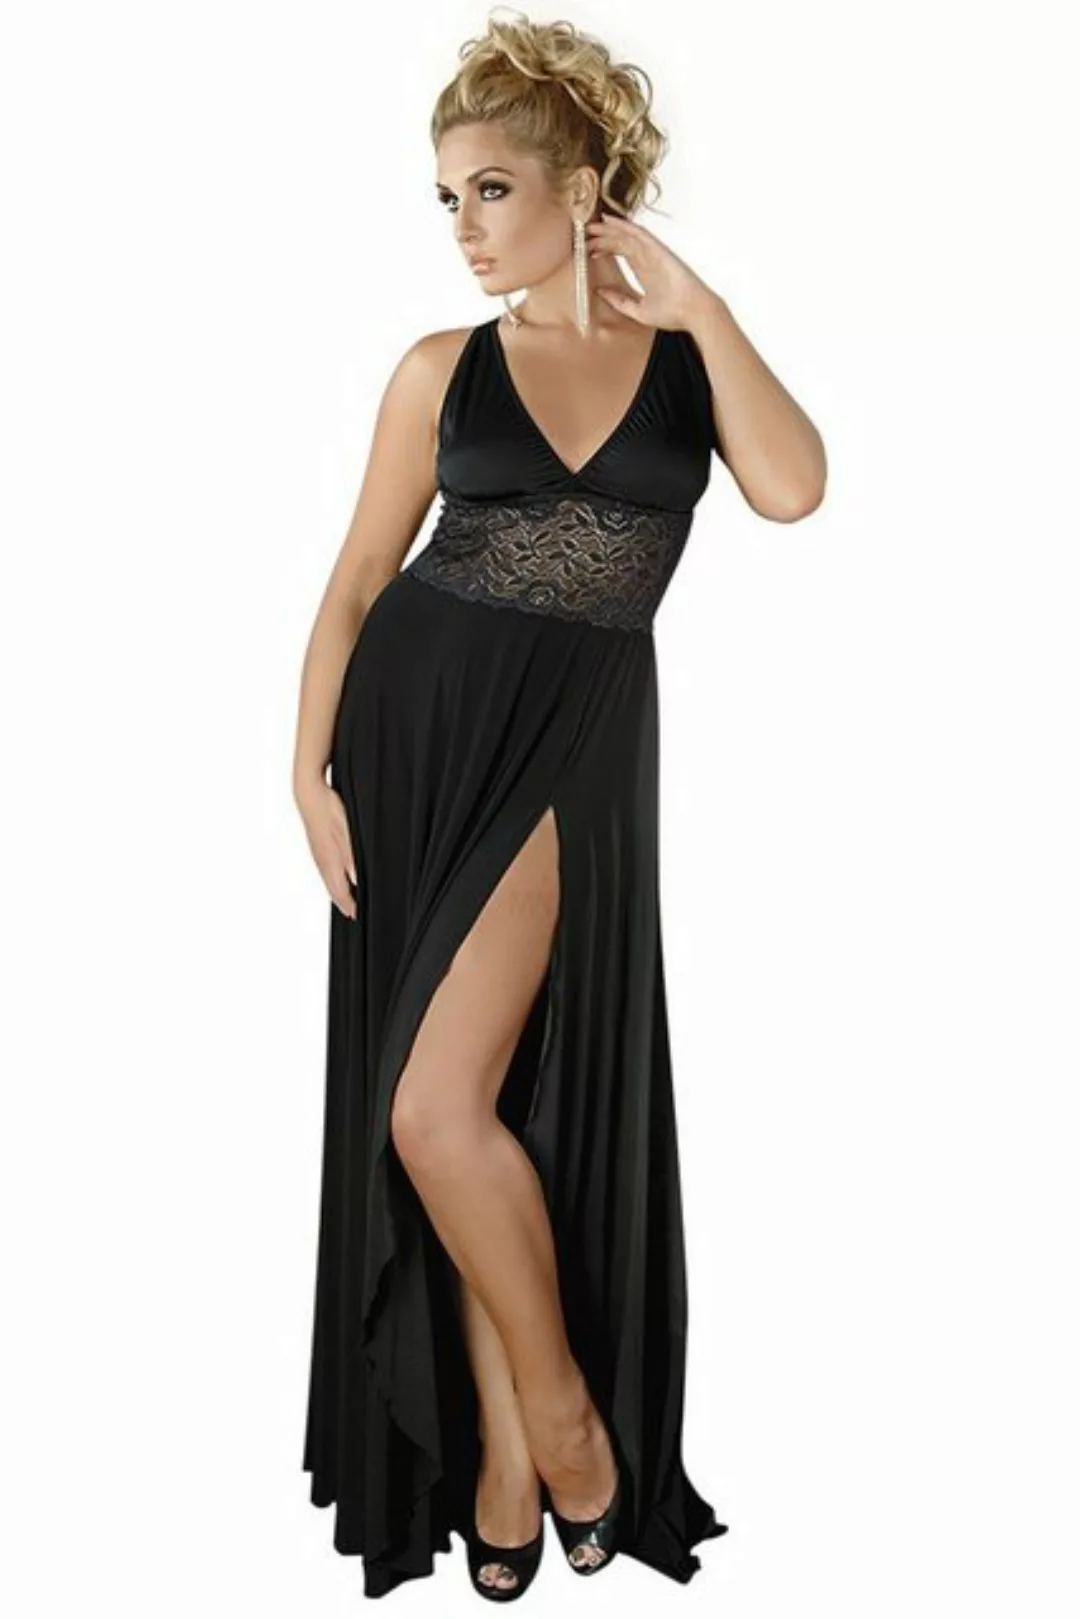 Andalea Partykleid Andalea - schwarzes langes Kleid M/1074 38/40 günstig online kaufen